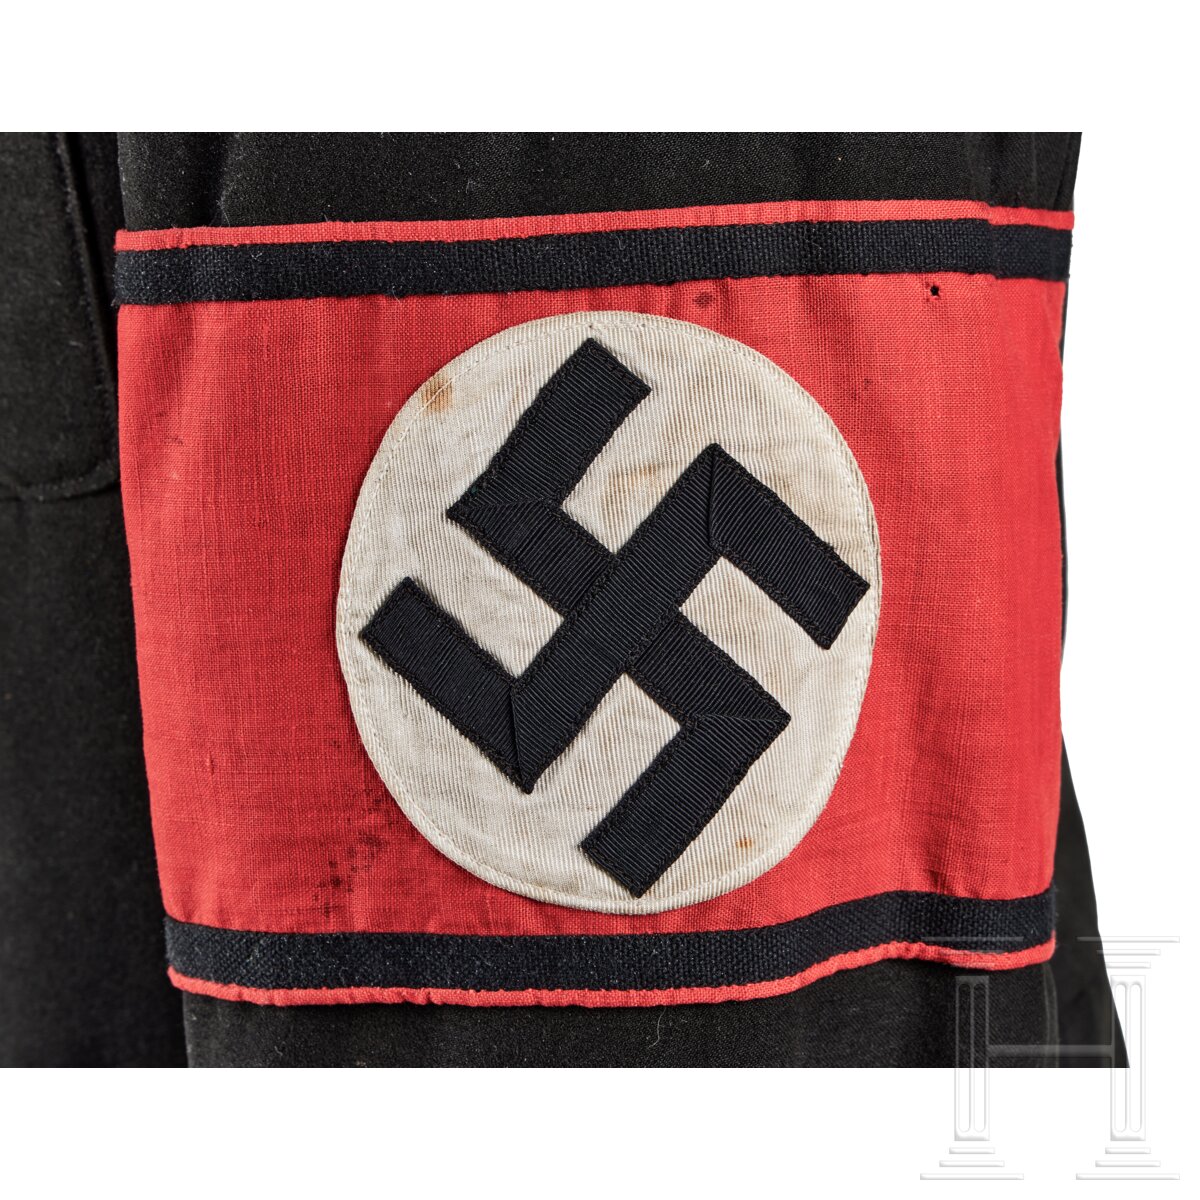 A Service Uniform for a Rottenführer of Motorstandarte 1 "München" - Image 14 of 15